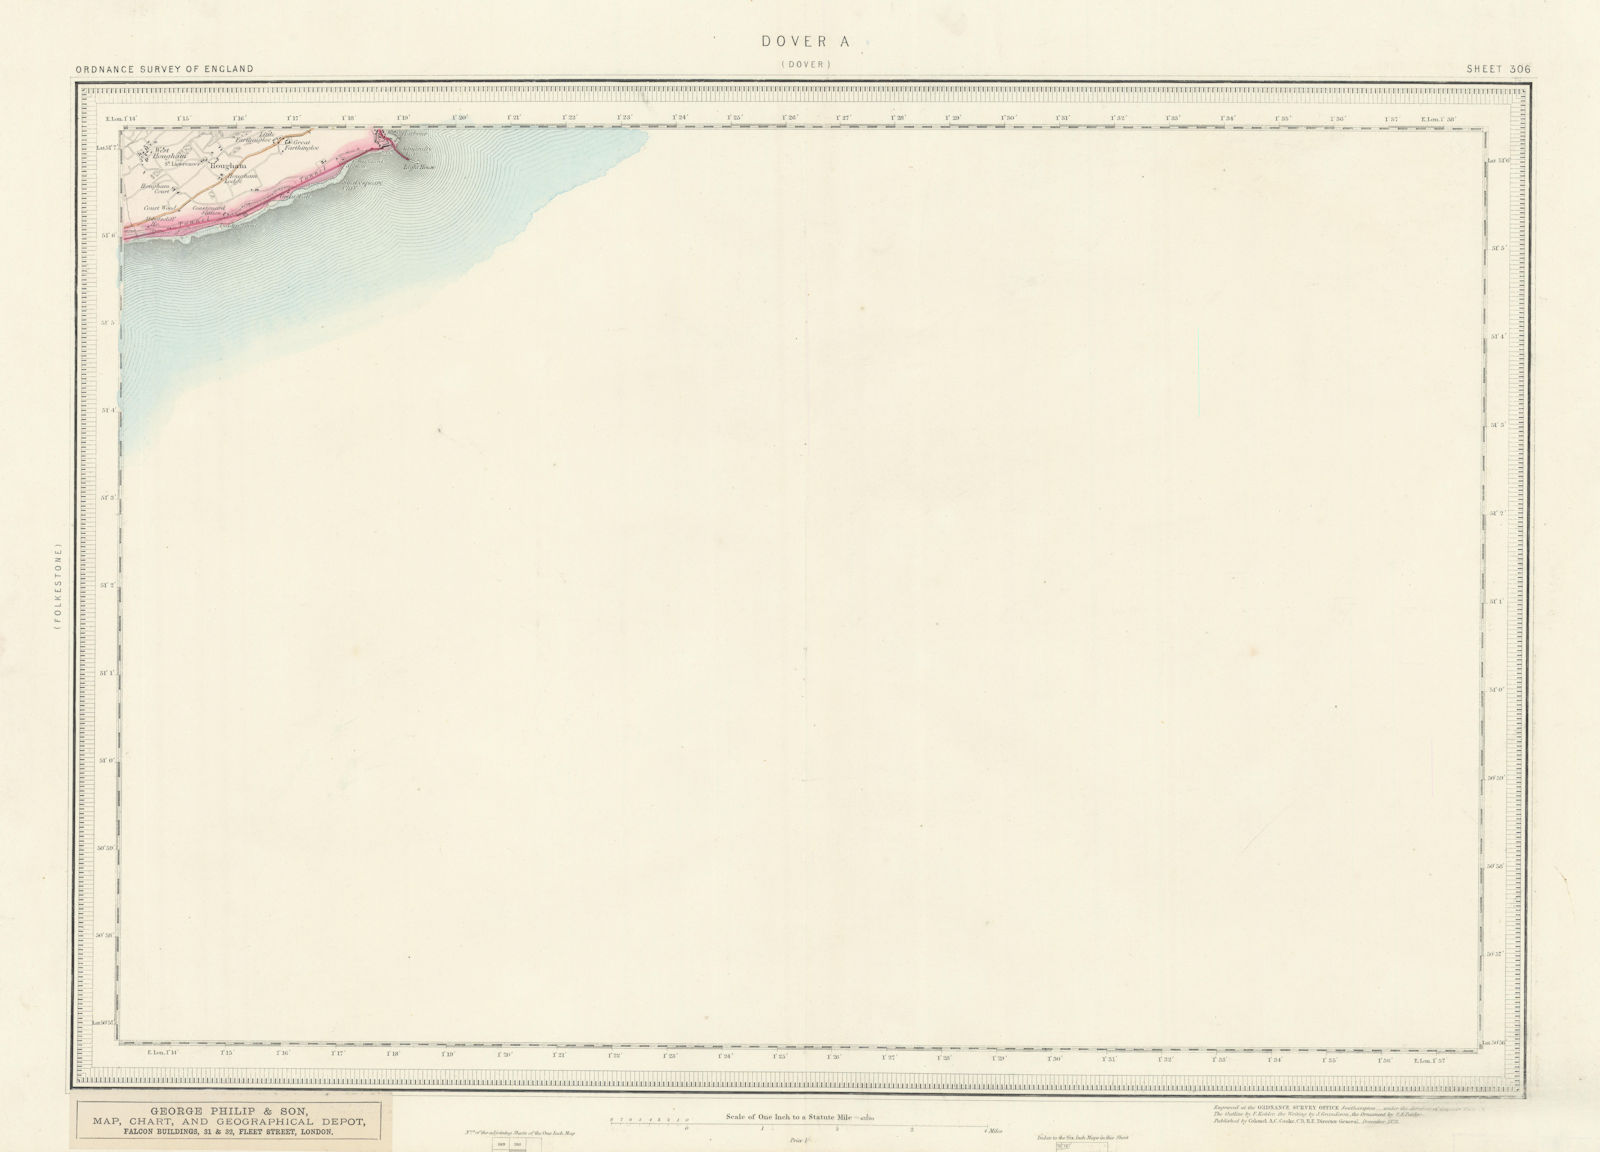 Ordnance Survey Sheet 306 Dover. Shakespeare Beach Hougham Samphire Hoe 1878 map